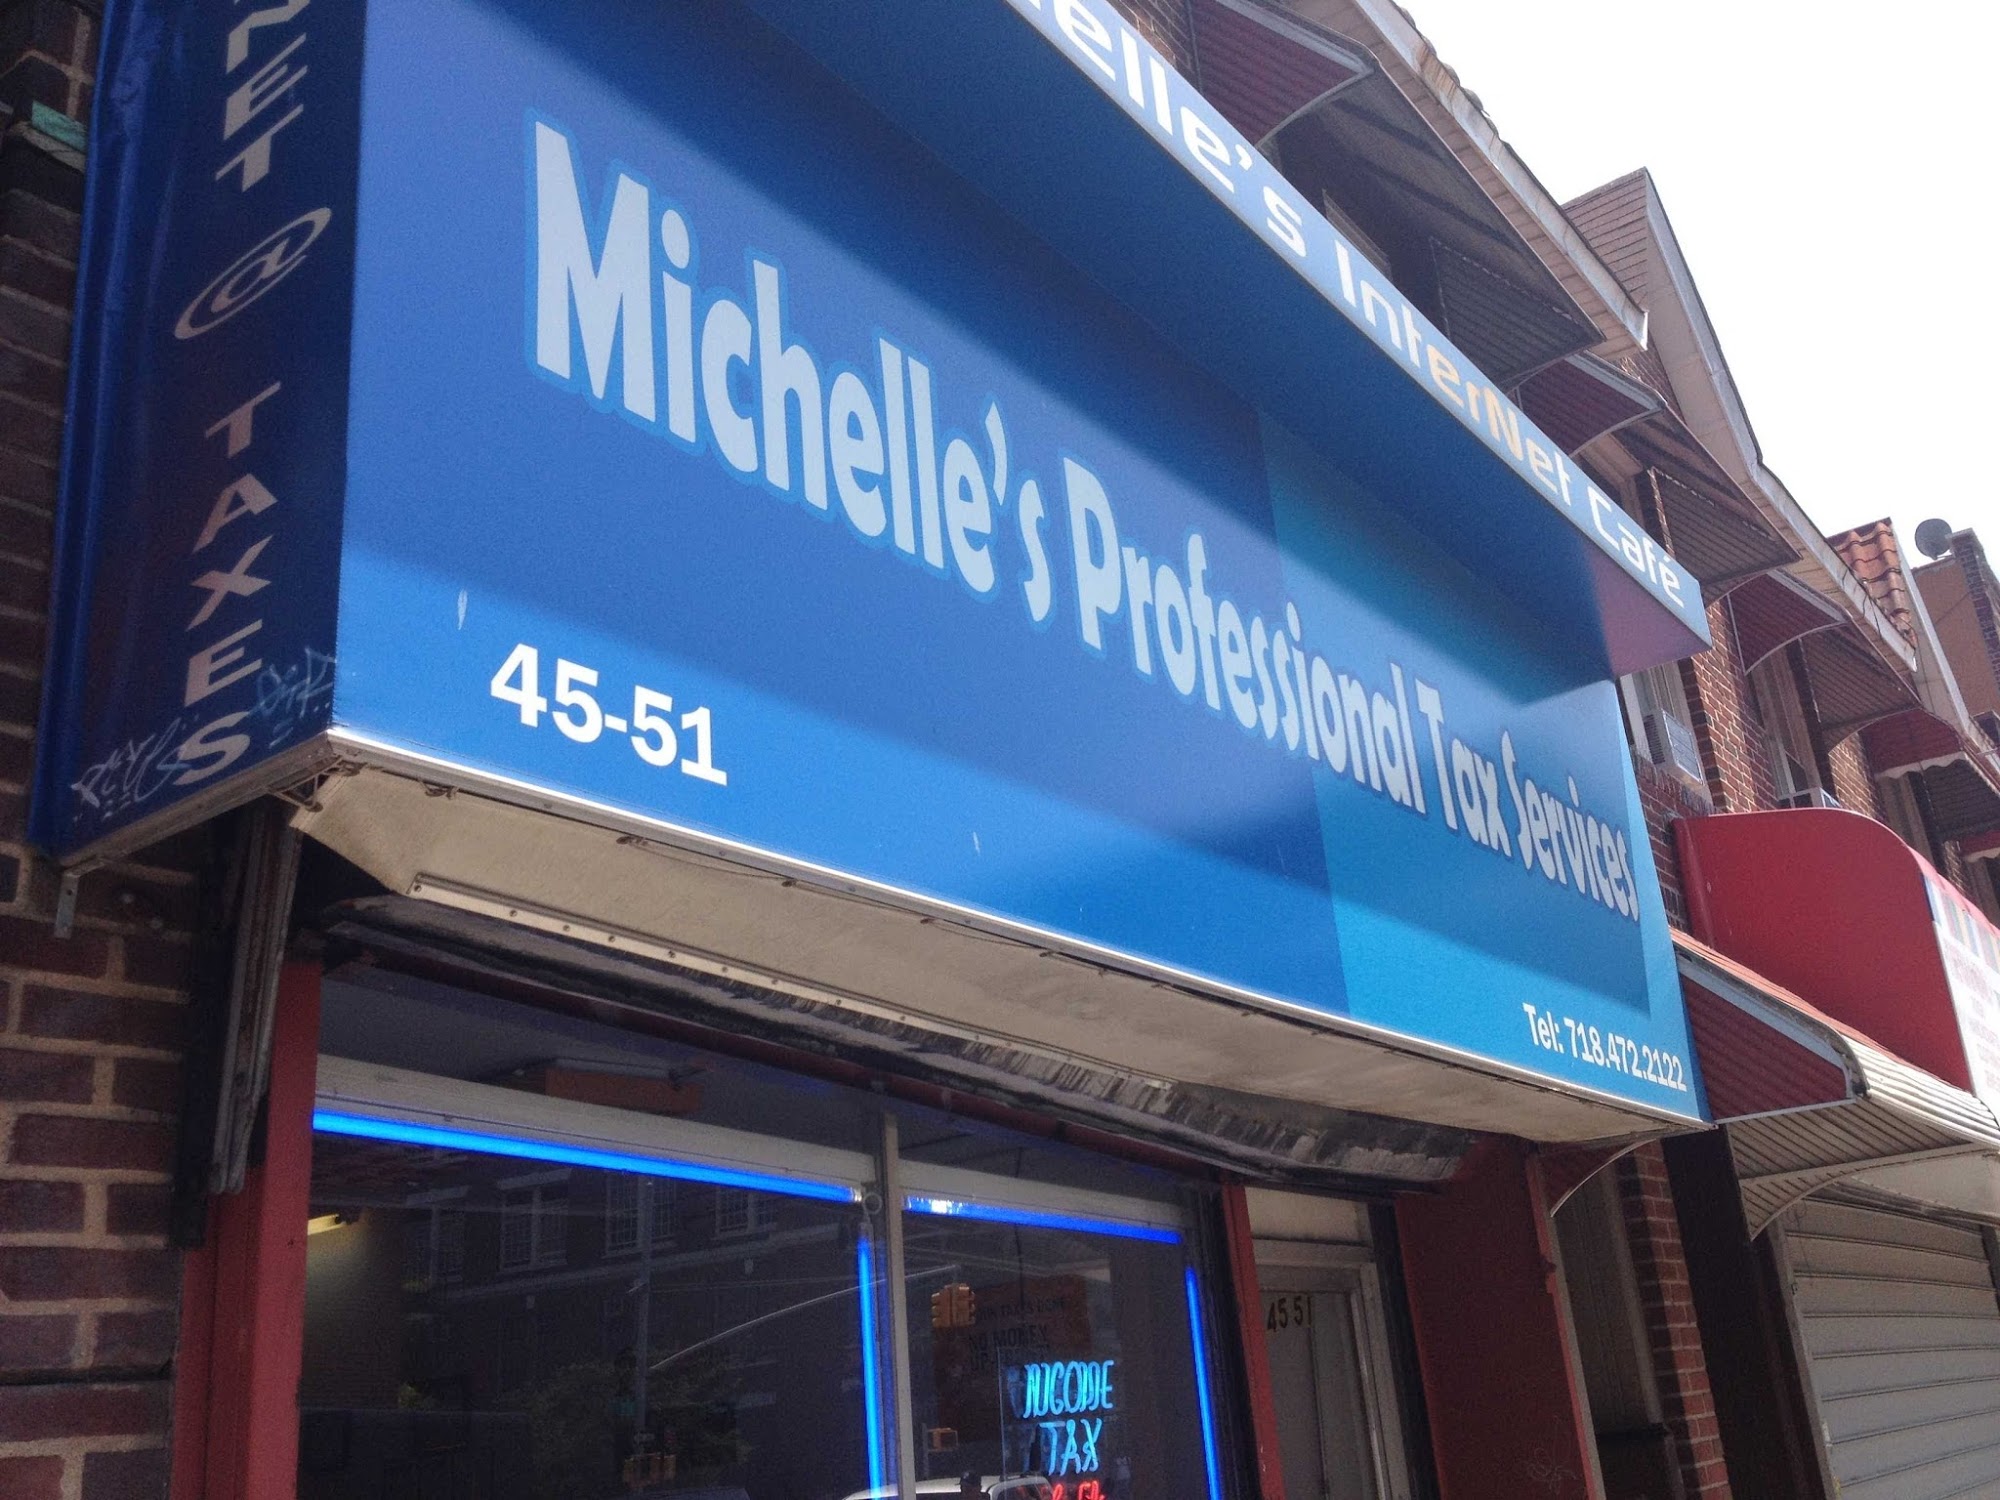 Michelle's InterNet Cafe Corporation.